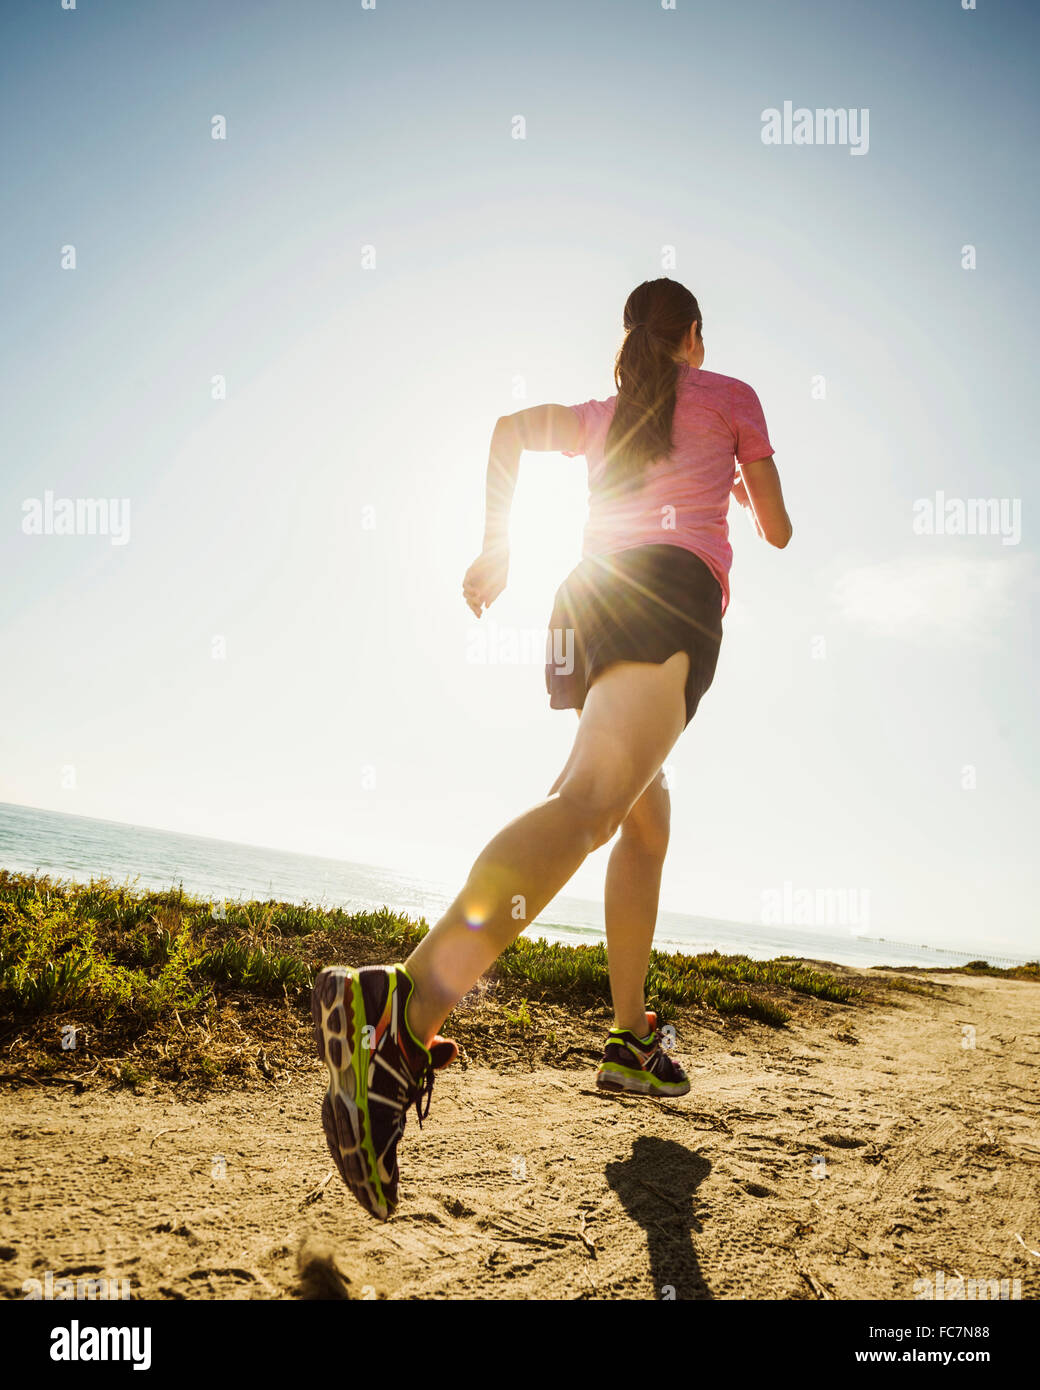 Caucasian woman jogging on dirt path Stock Photo